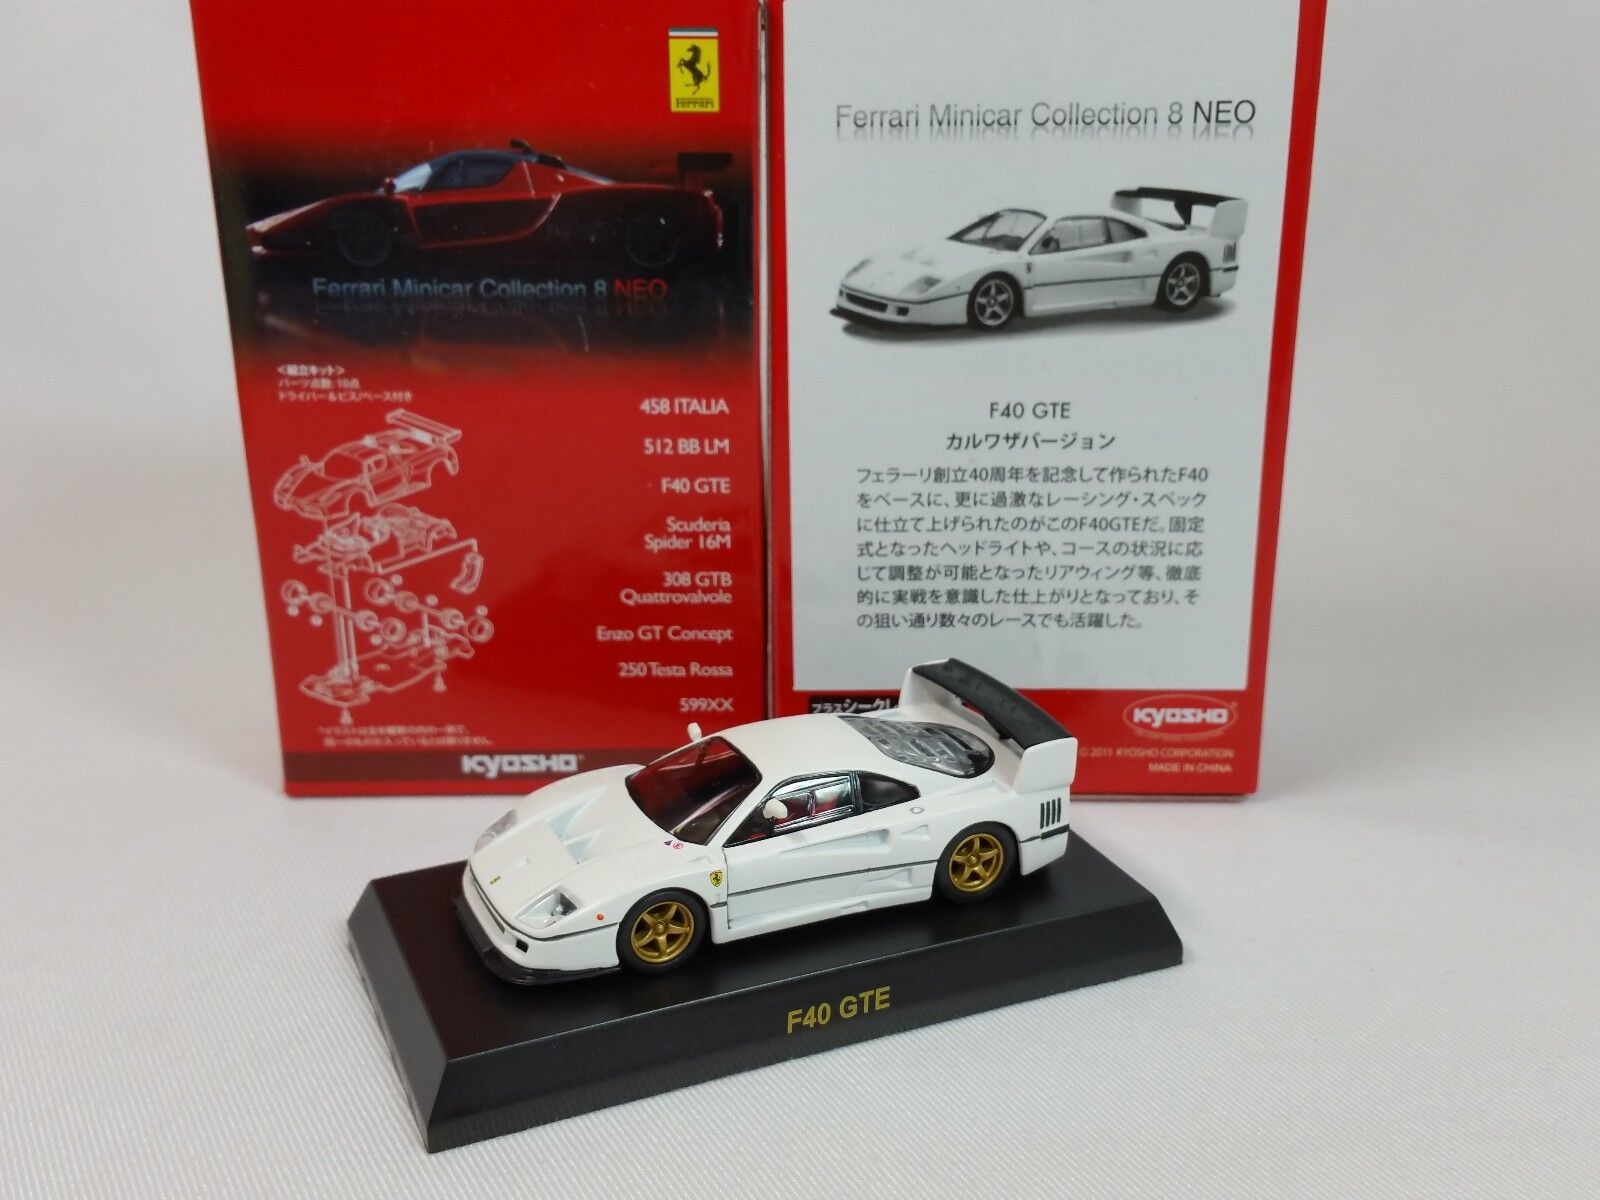 1:64 Kyosho Ferrari Minicar Collection 8 NEO F40 GTE LM 1994-1996 Matt Karuwaza